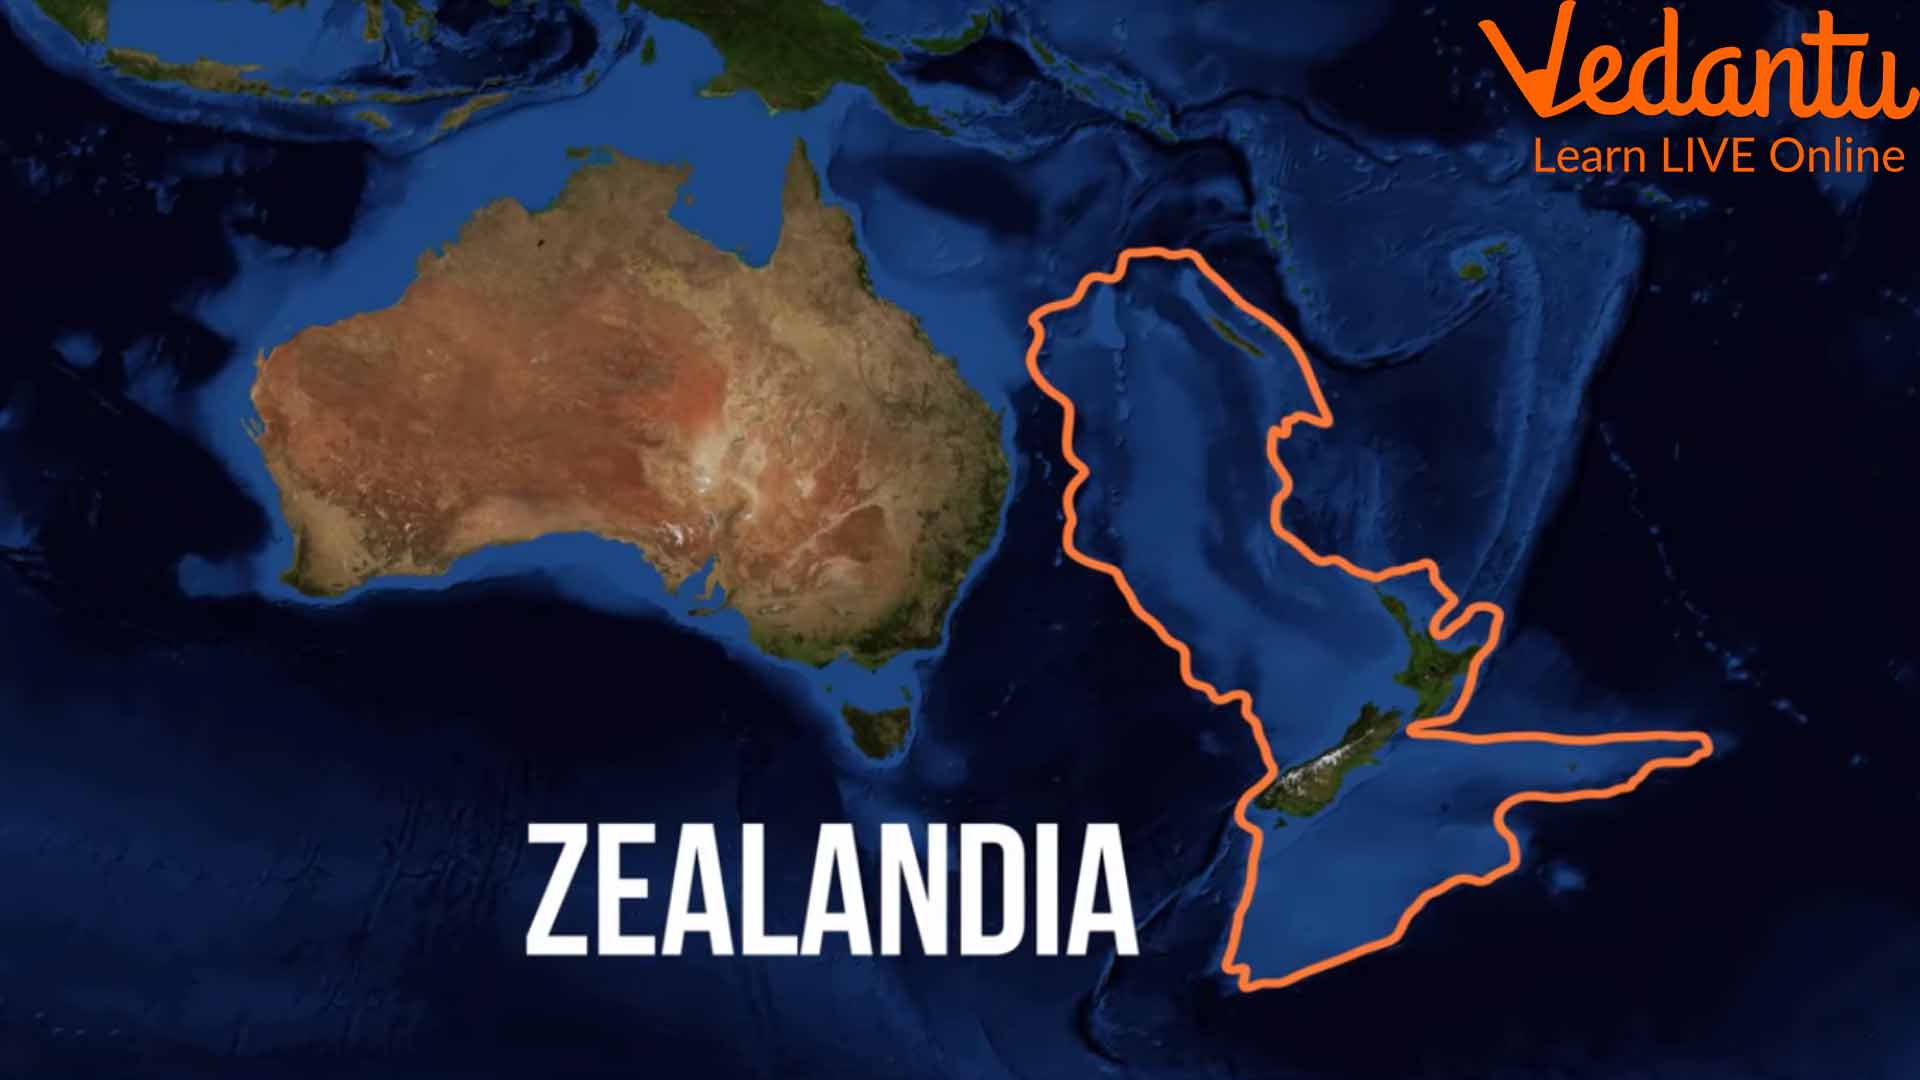 Zealandia - The New Continent